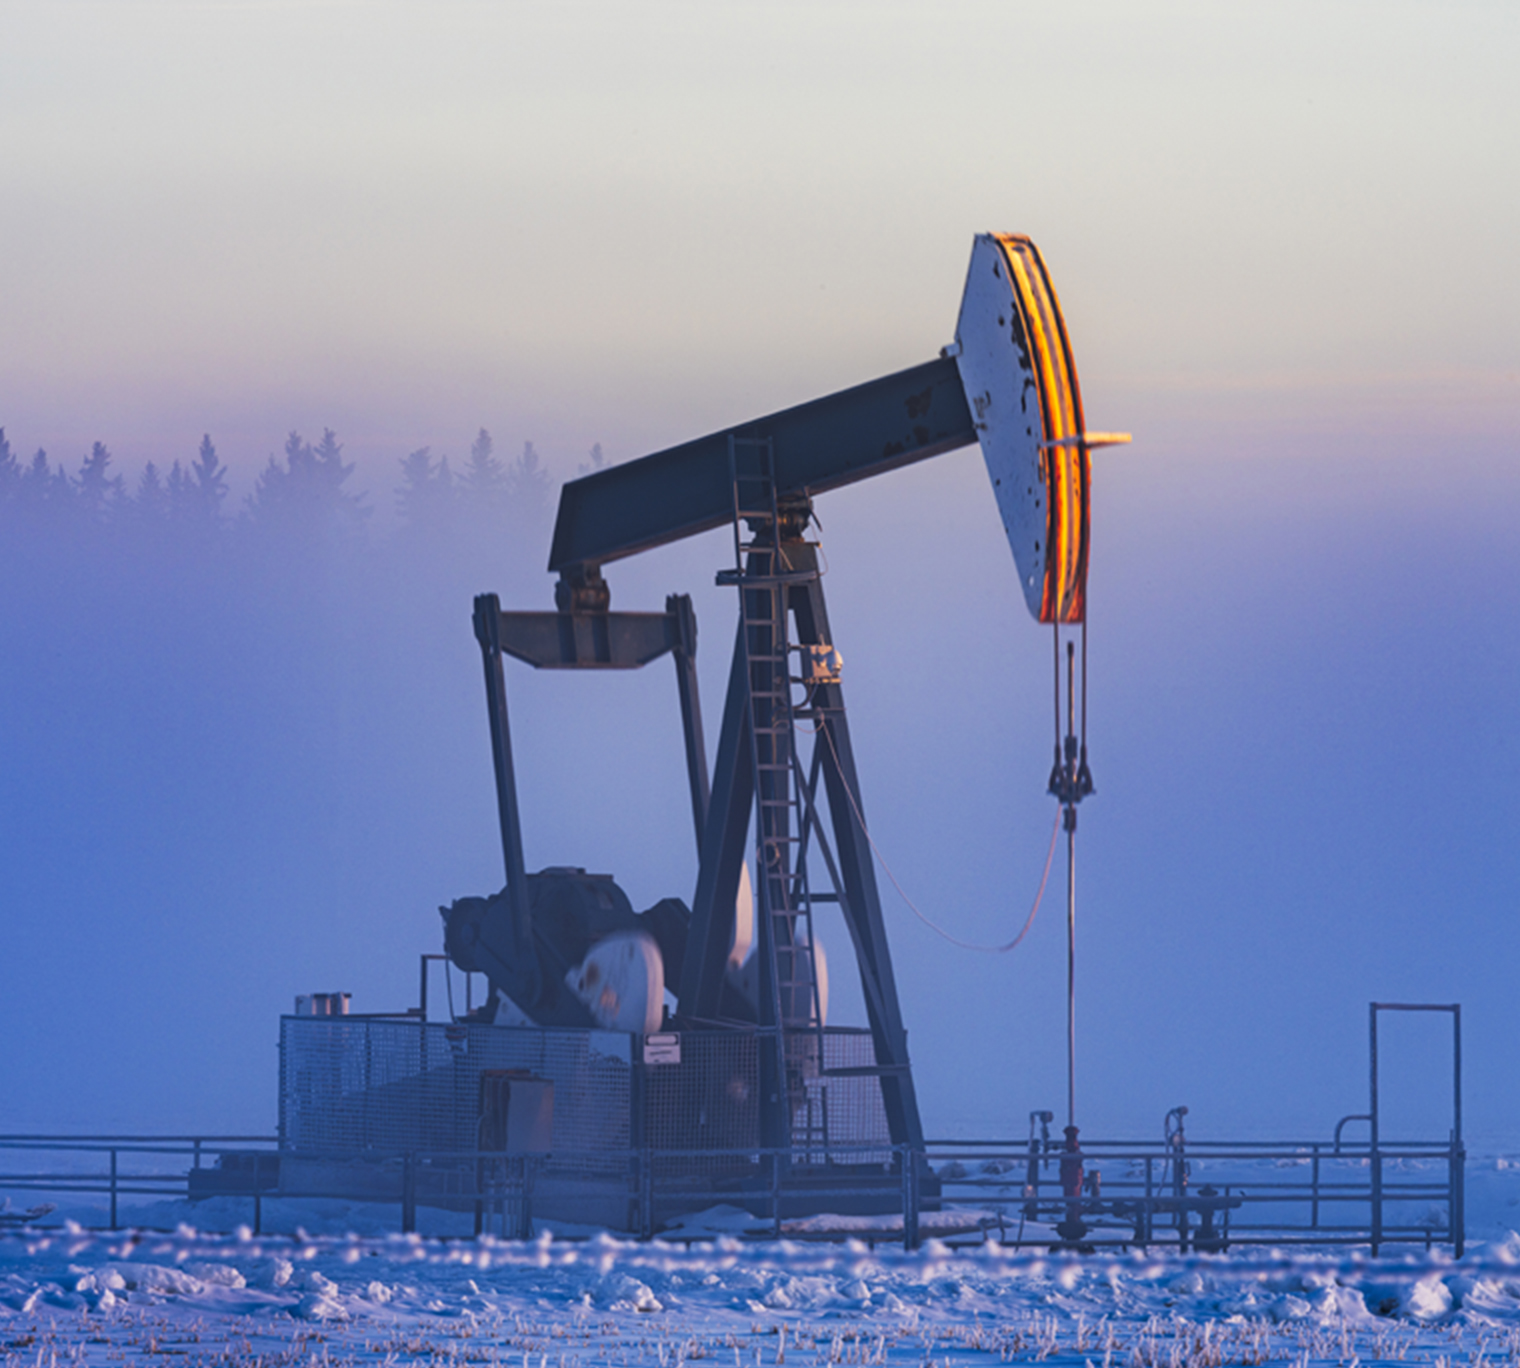 Oil pumping in winter morning, Alberta, Canada.